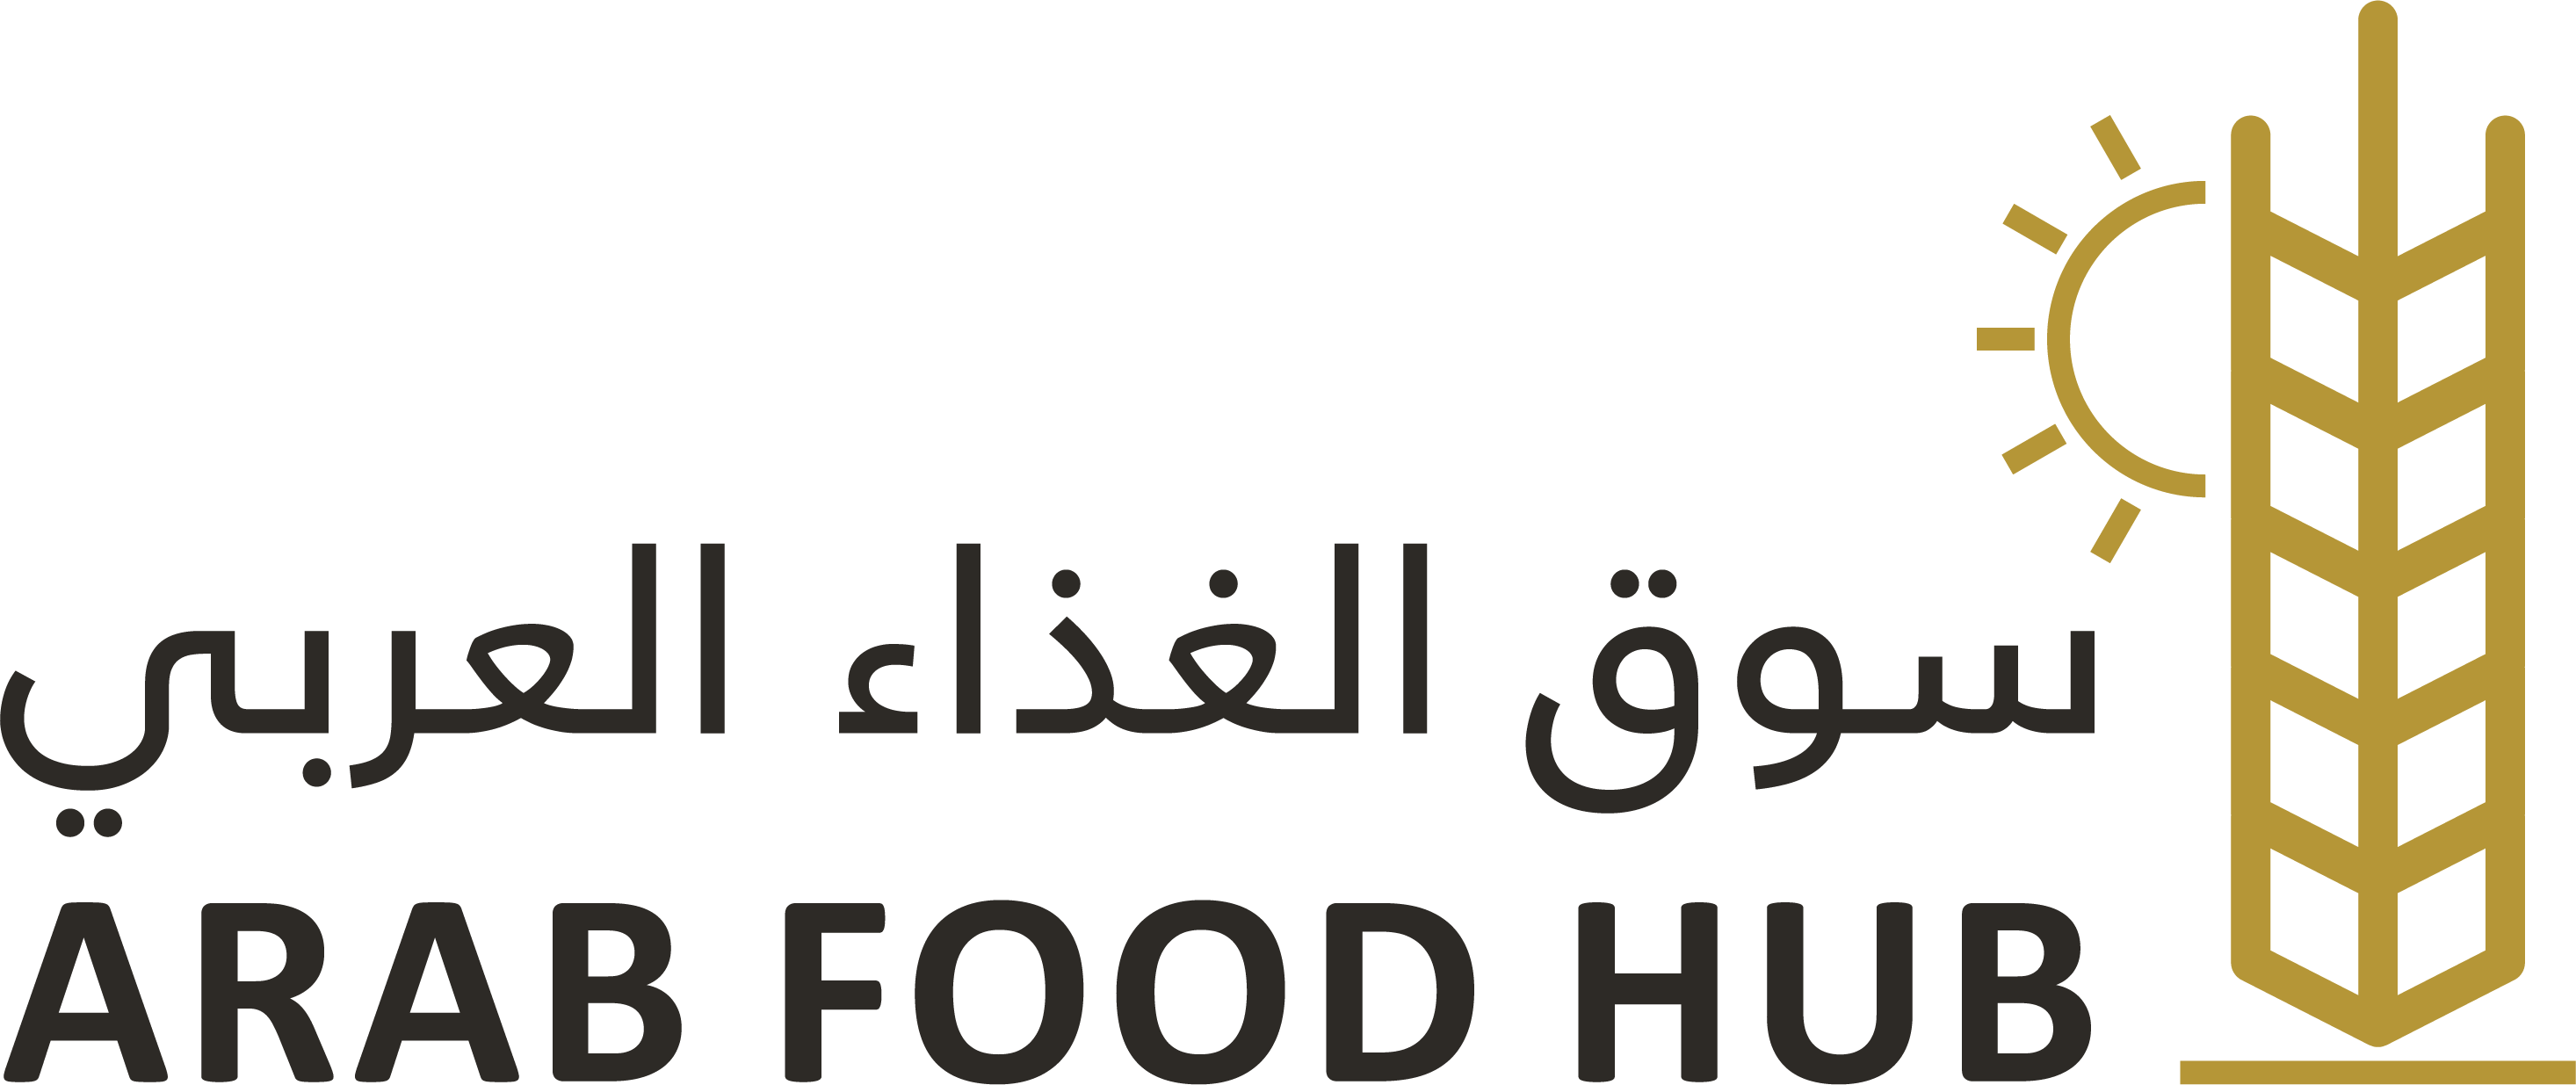 Afh logo